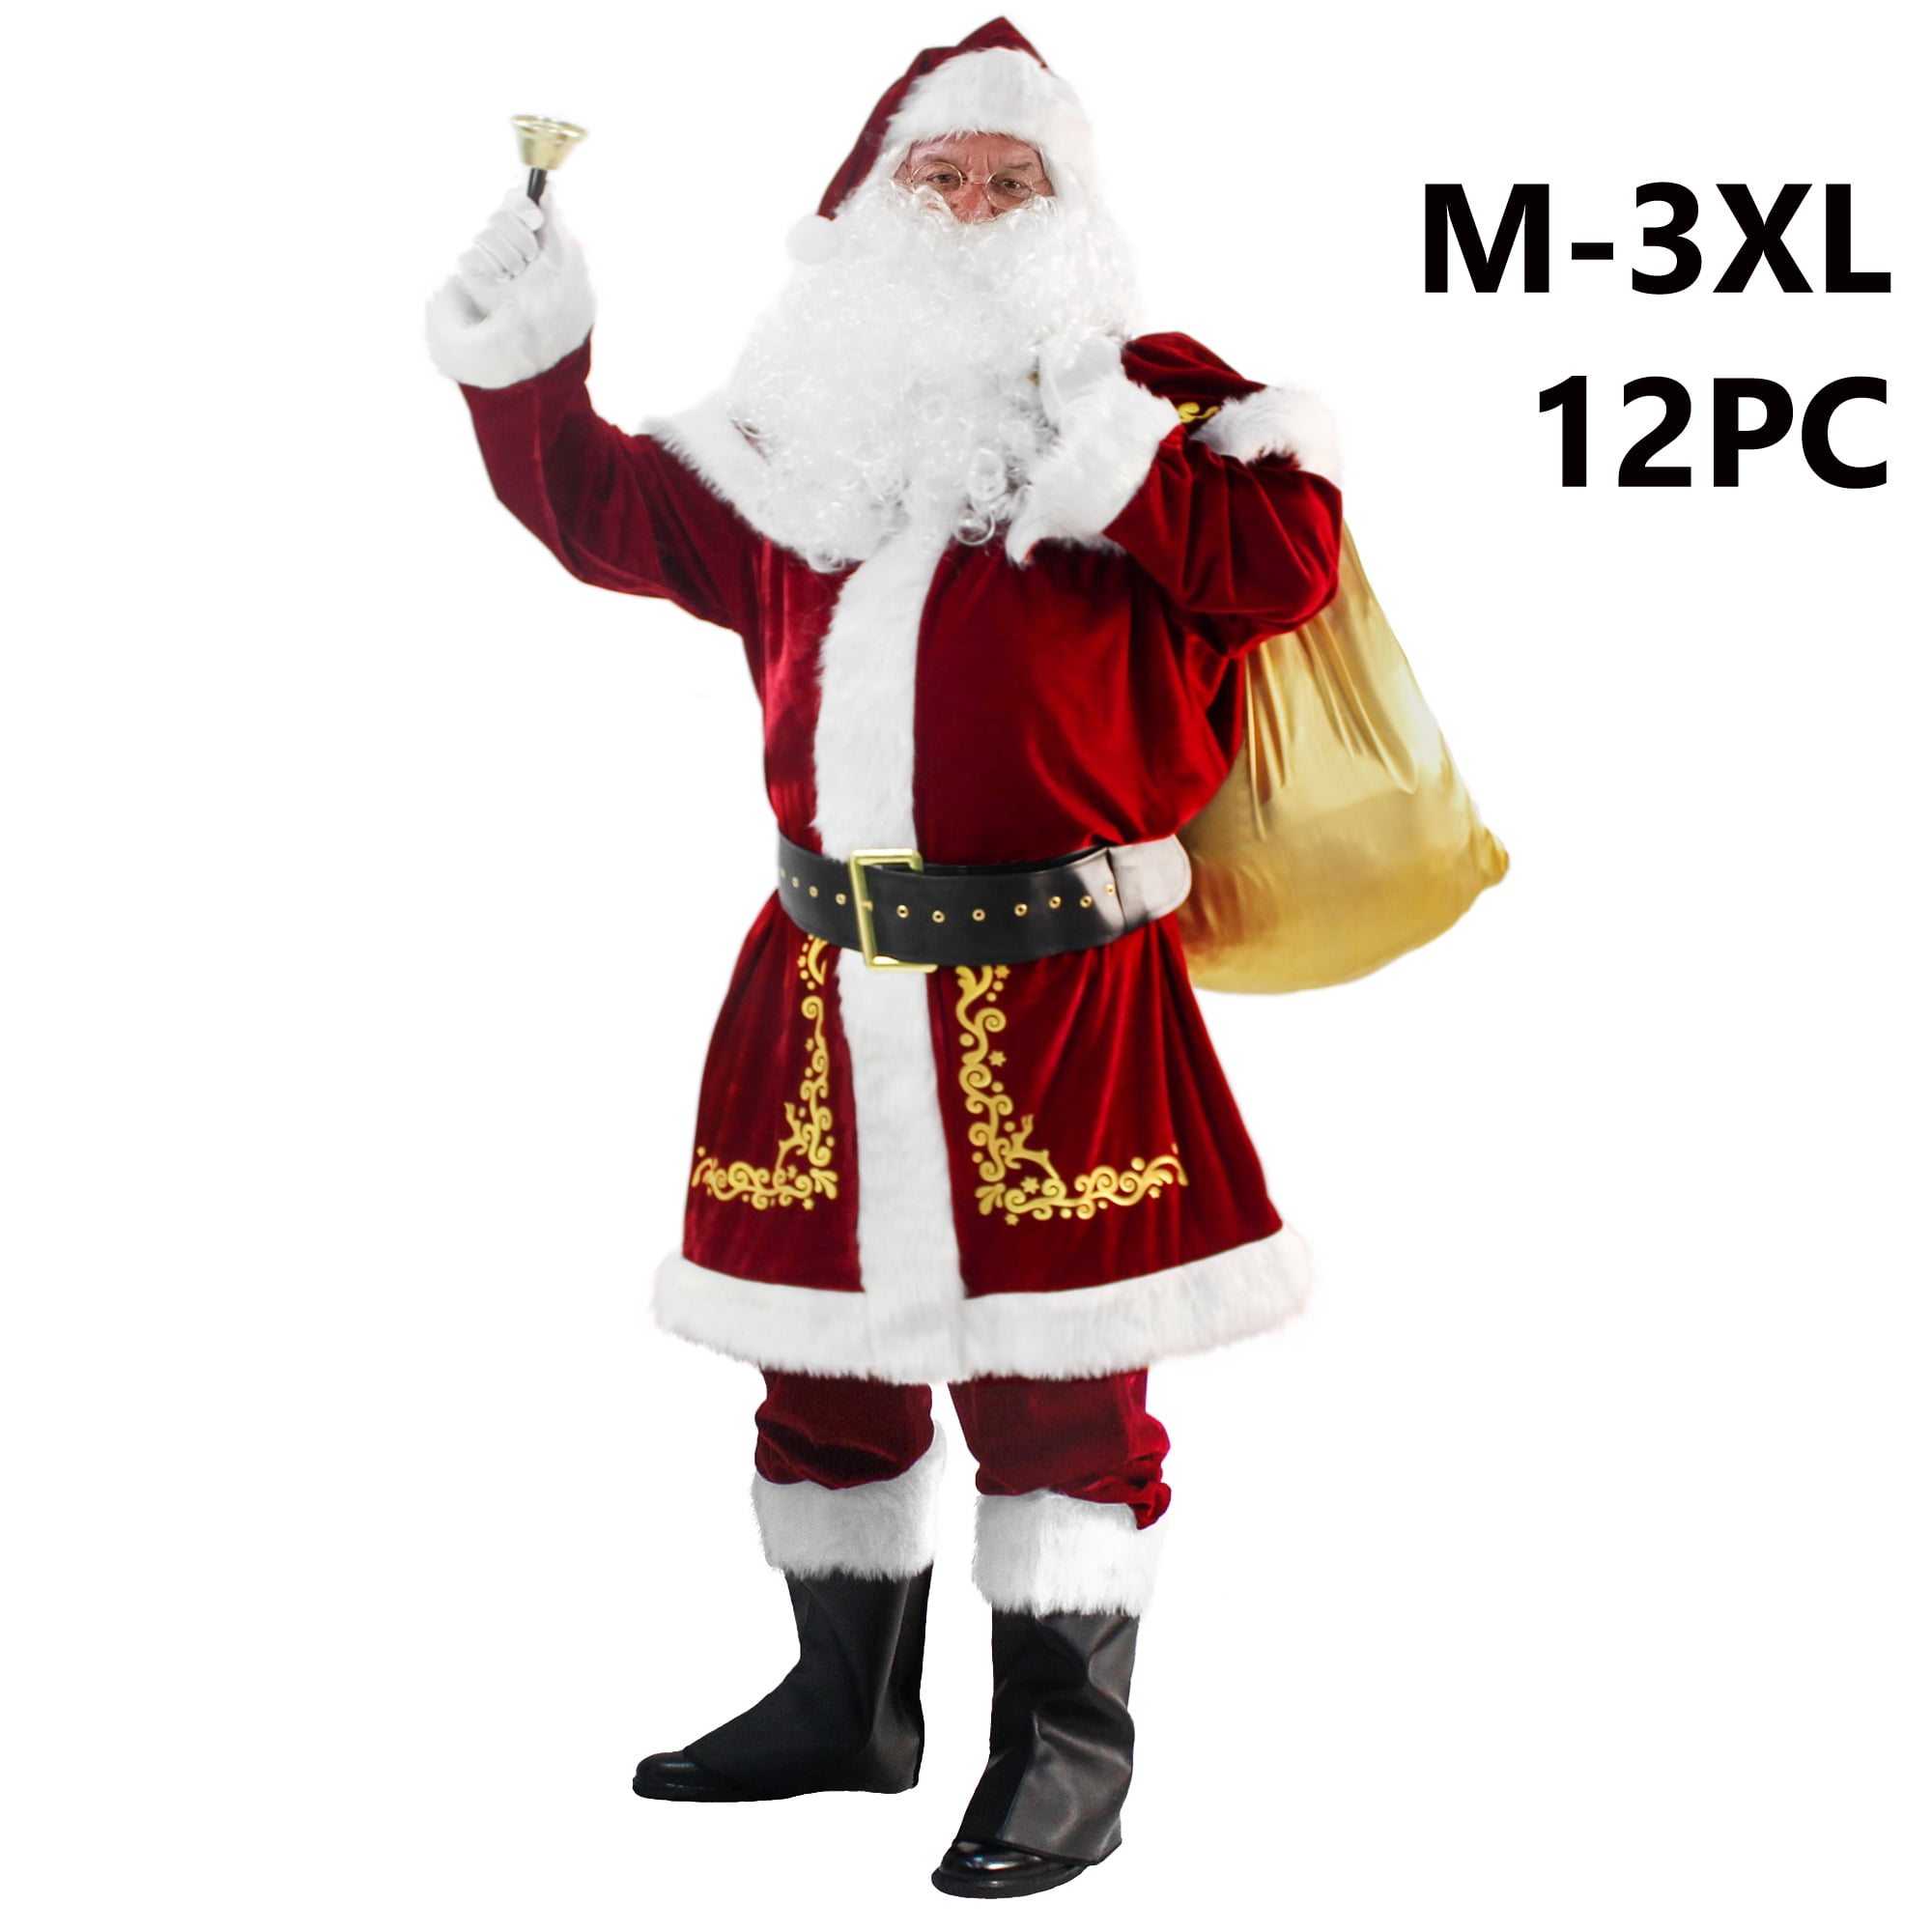 Santa Suit Adult Costume 12PC -XXXL - Walmart.com